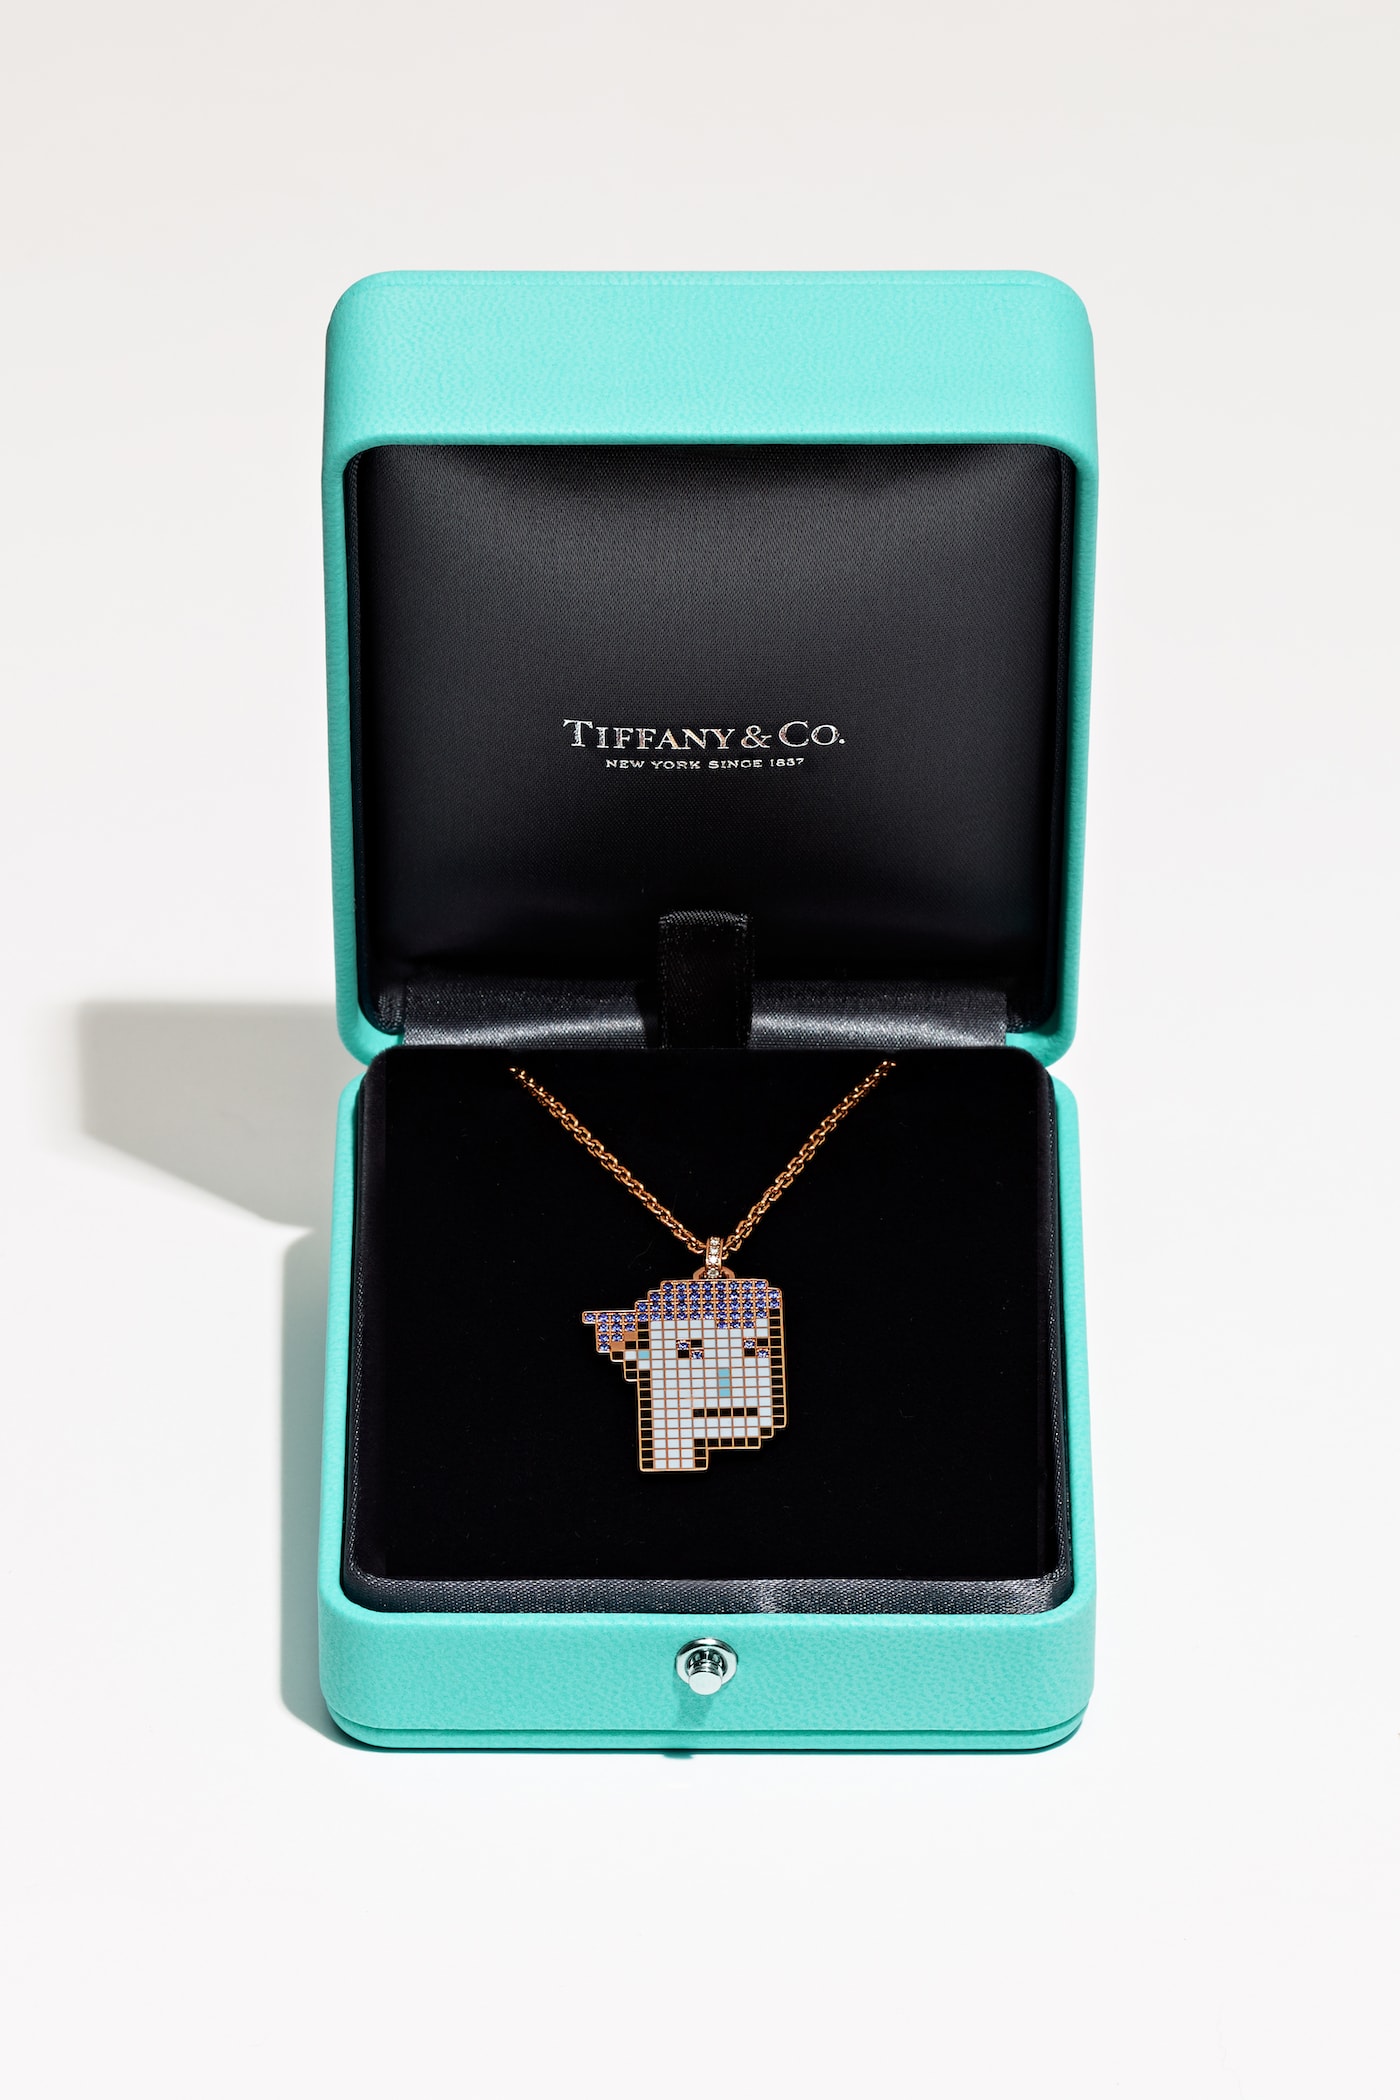 Tiffany & Co. 推出「NFTiff」专属 CryptoPunks 定制珠宝